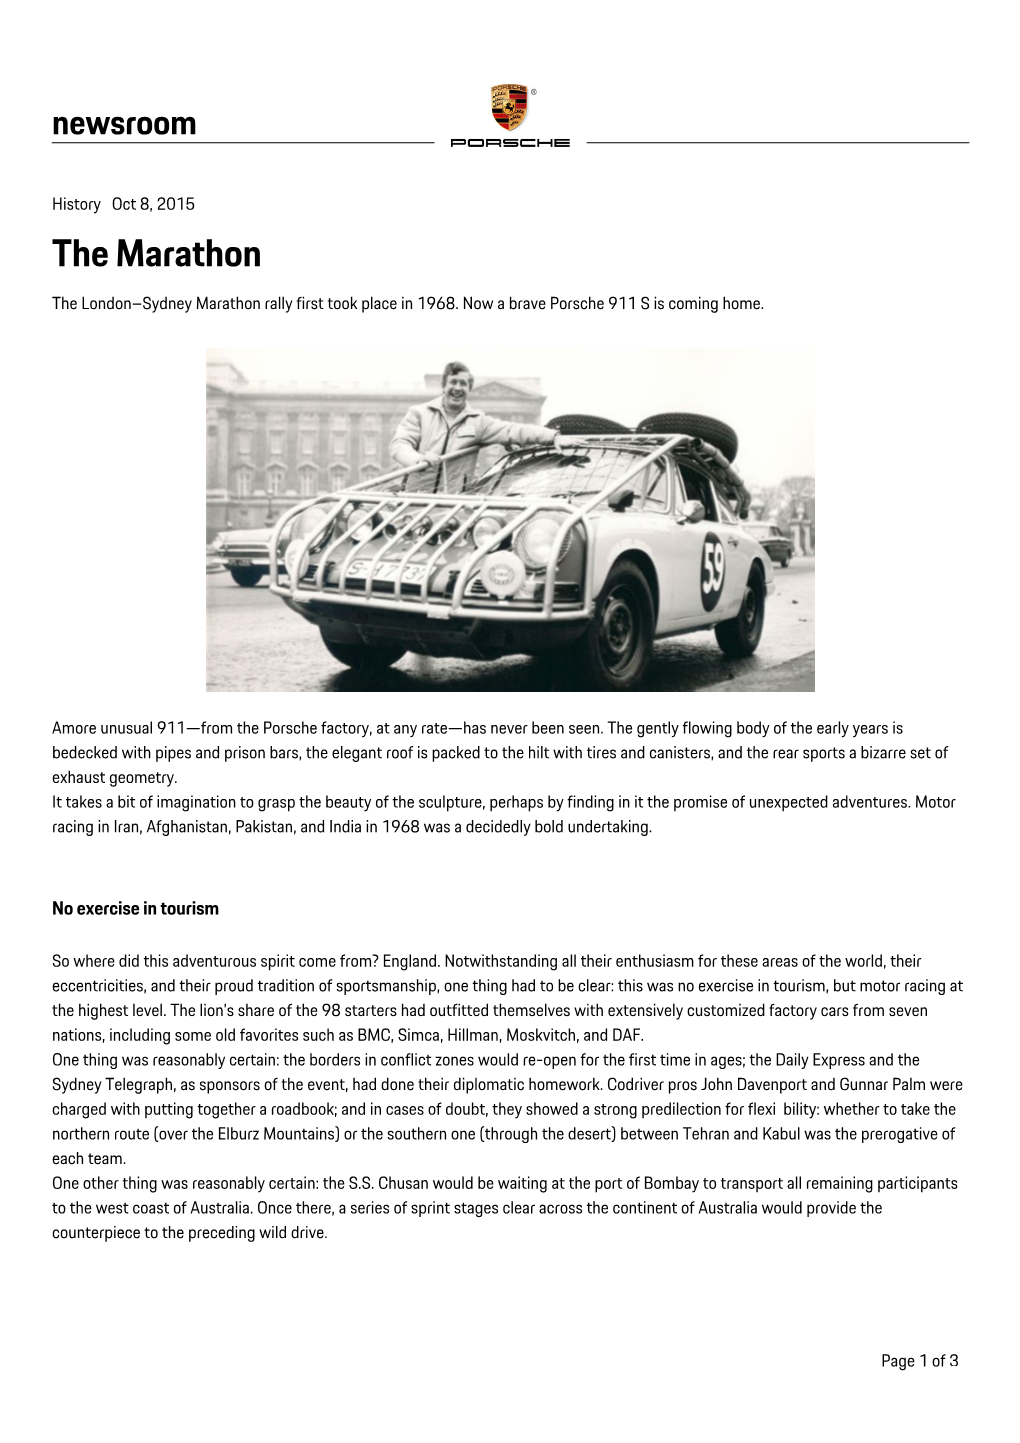 The Marathon the London–Sydney Marathon Rally First Took Place in 1968